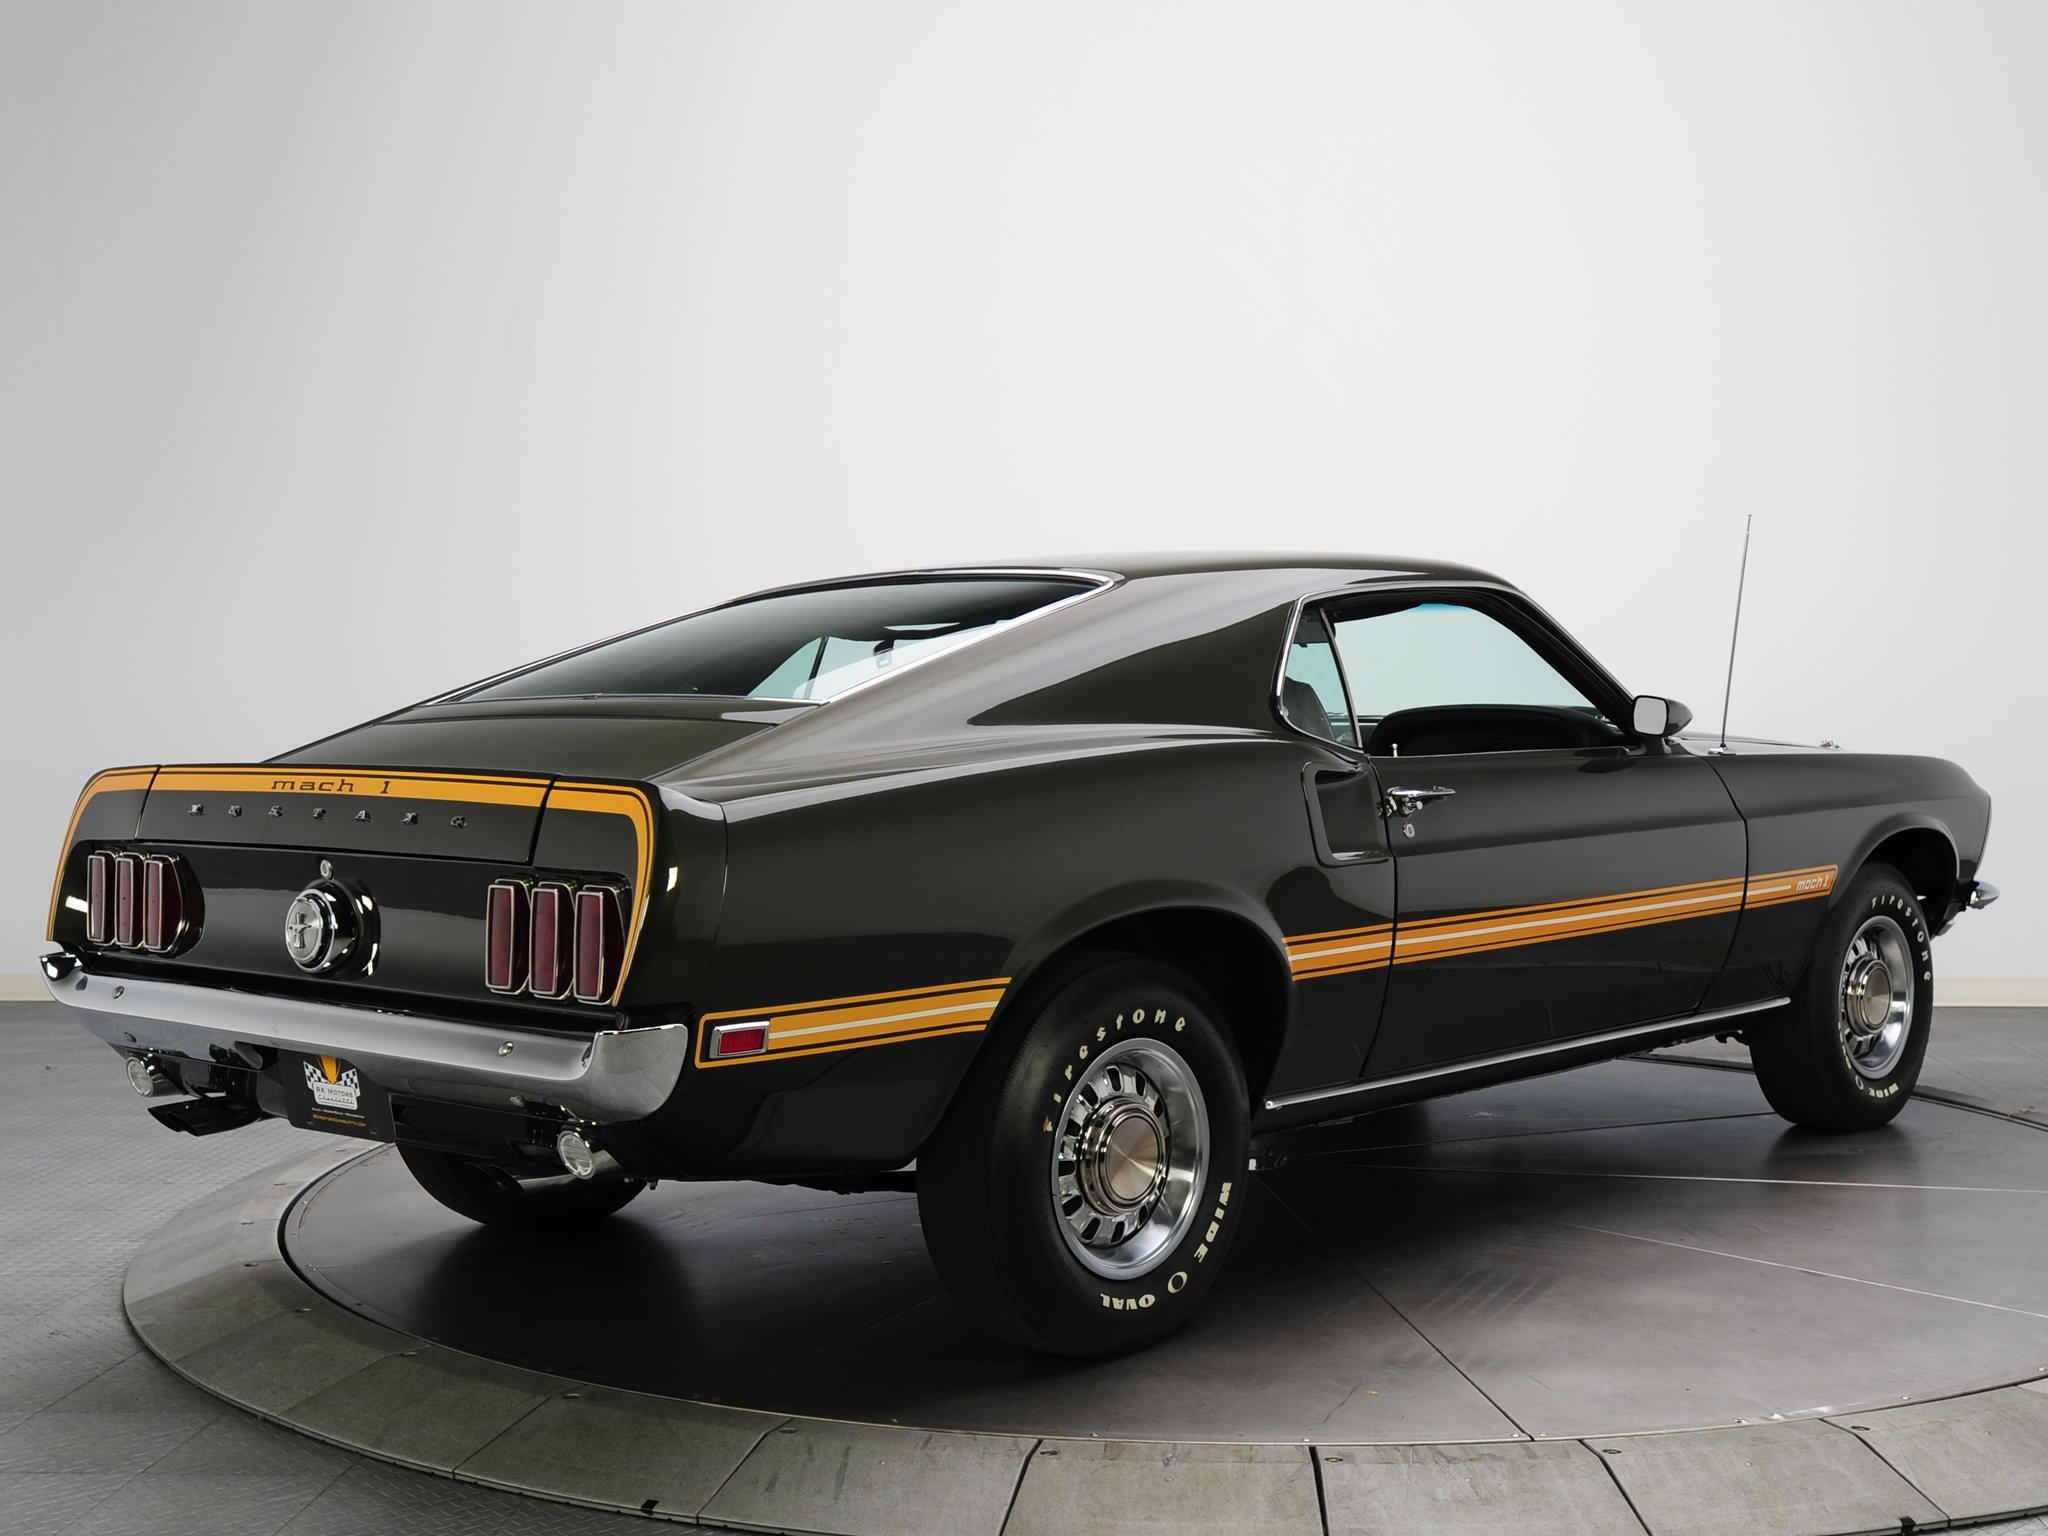 Ford Mustang Mach 1 1969. Форд Мустанг Mach 1. Форд Мустанг Кобра Джет 1969. Ford Mustang Mach 1. Первые мустанги